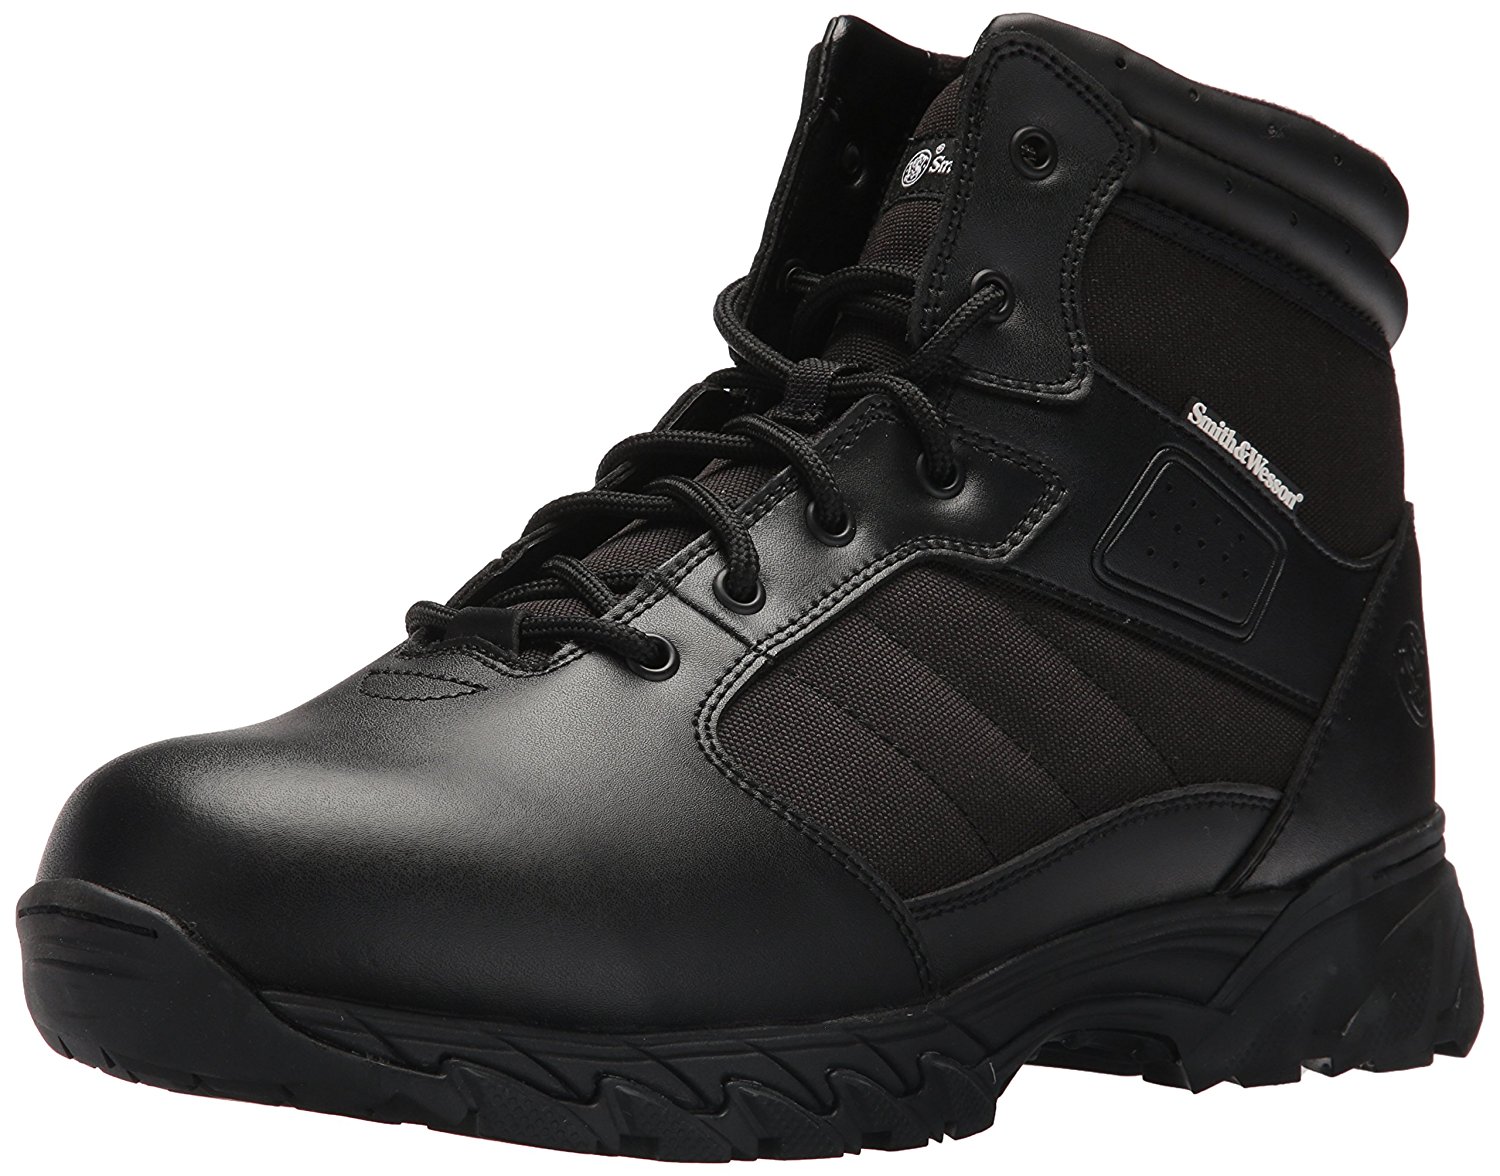 Smith & Wesson Footwear Breach 2.0 Men's Tactical Waterproof Side-Zip Boots 